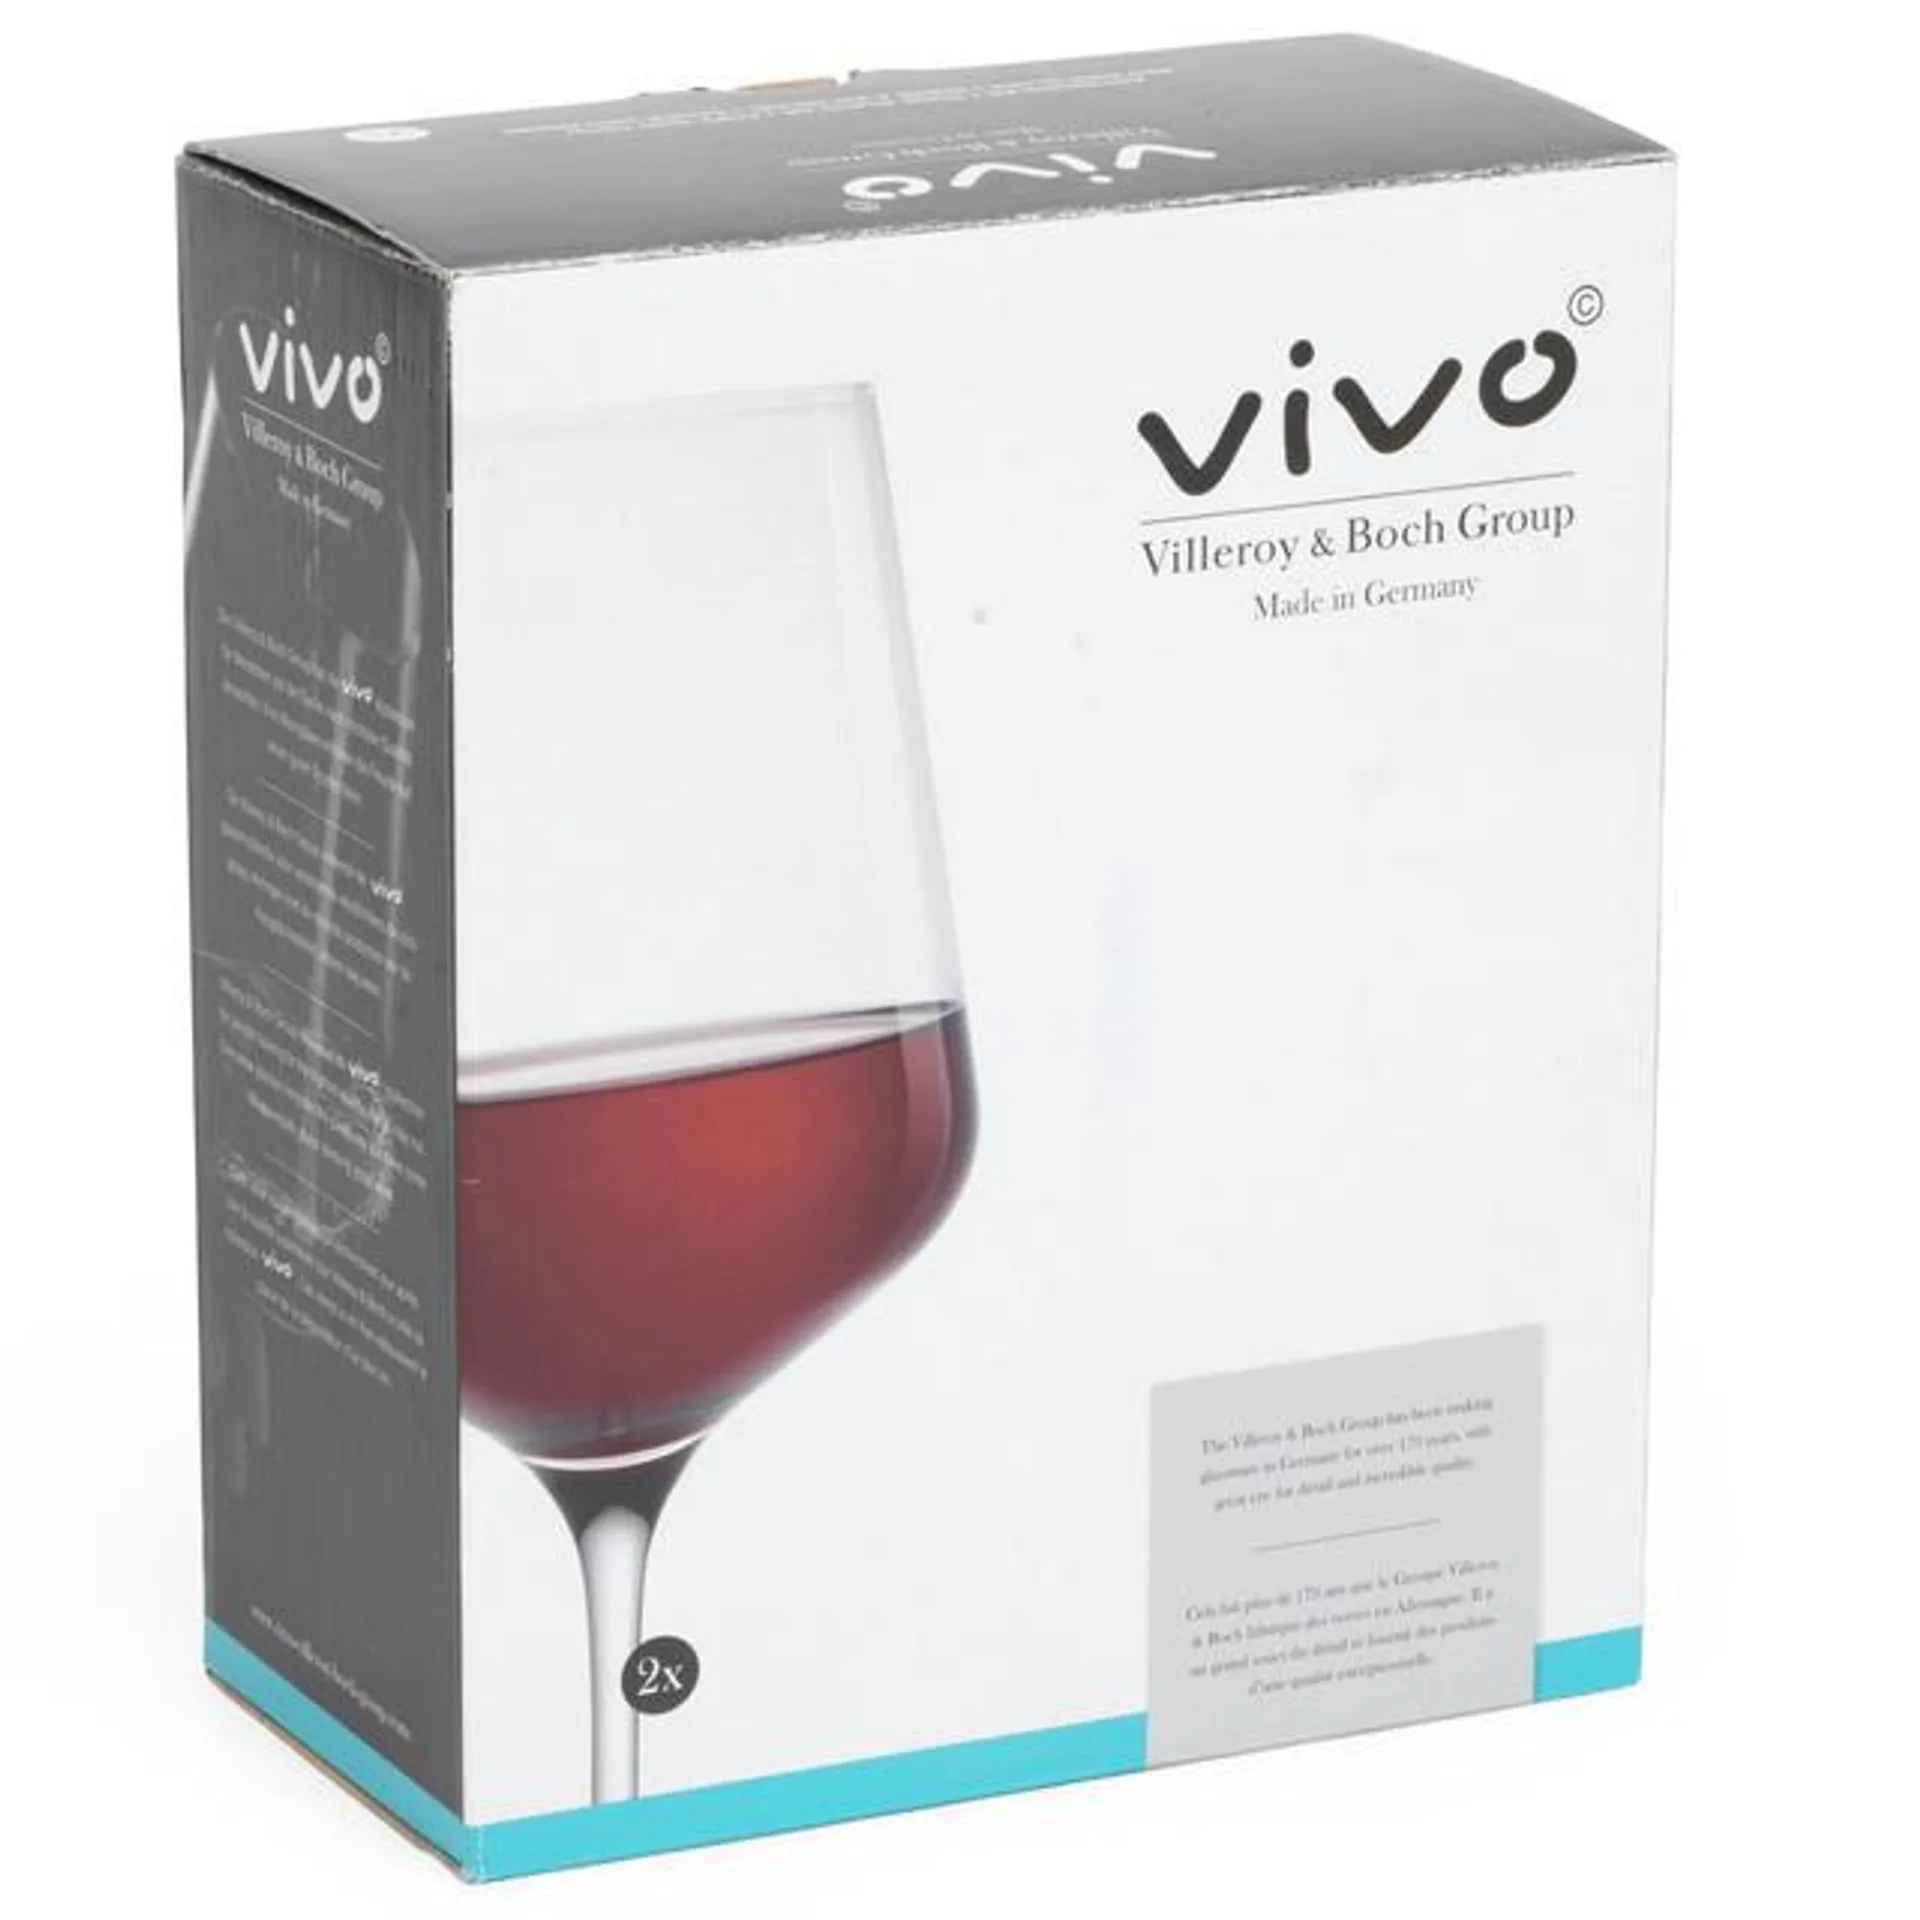 Villeroy & Boch Vivo Red Wine Glasses 2 per pack